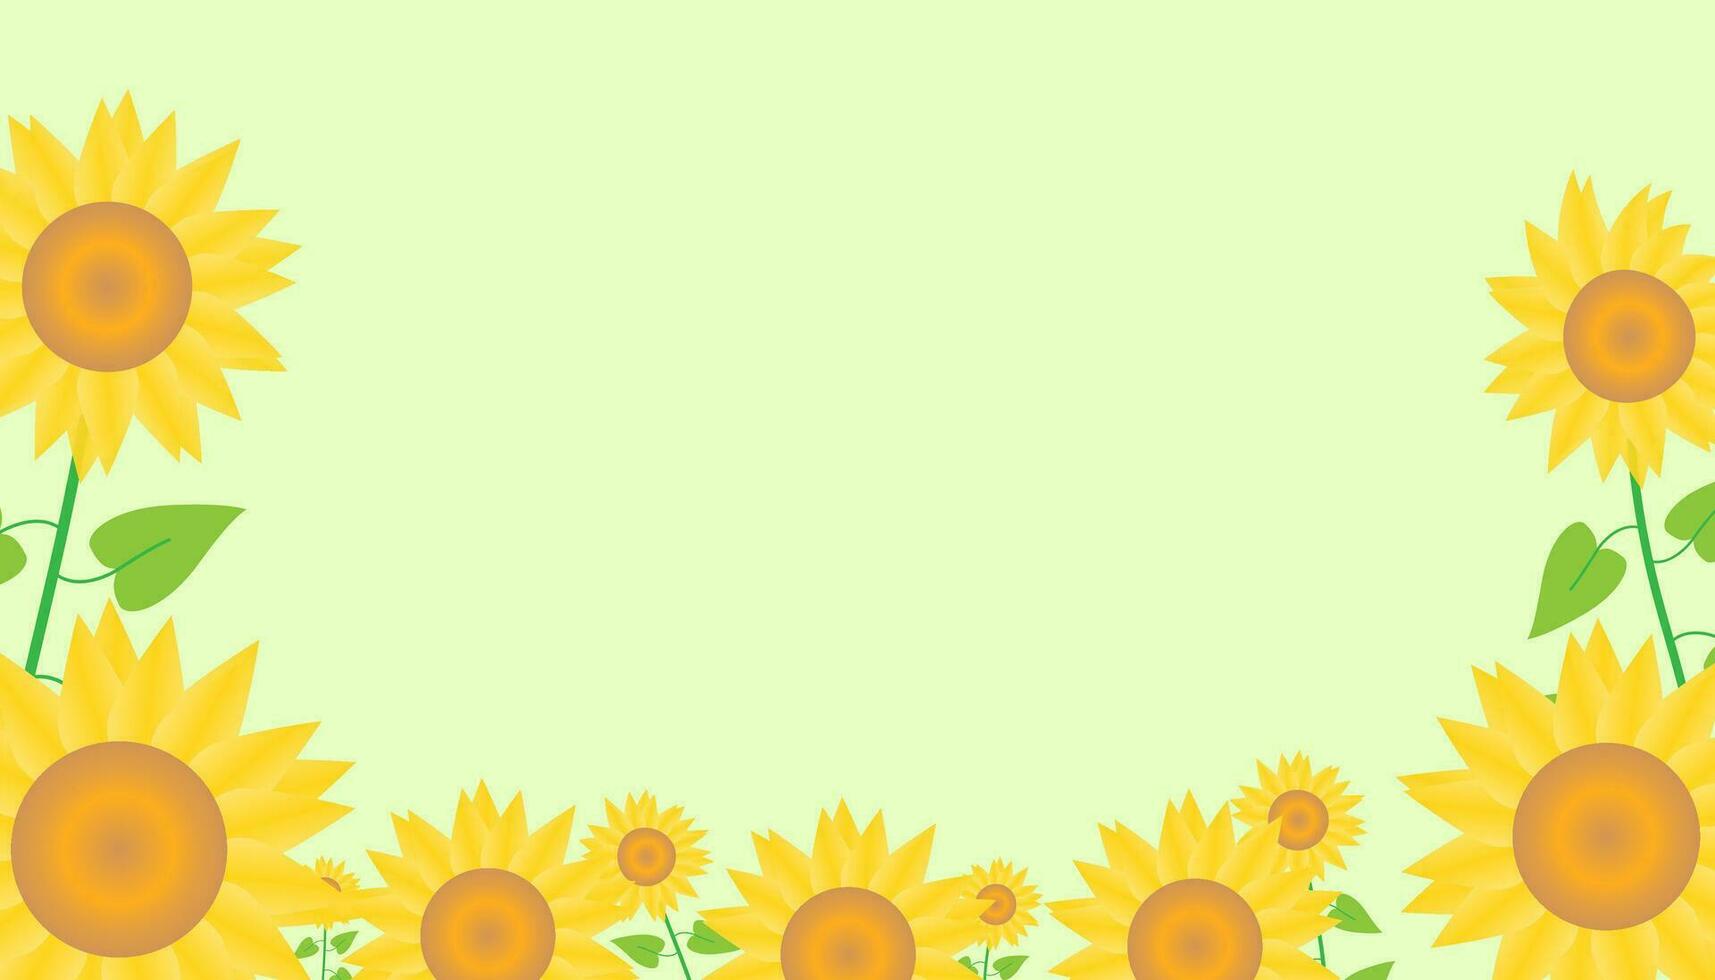 Sunflower Background And Border Vector Illustration